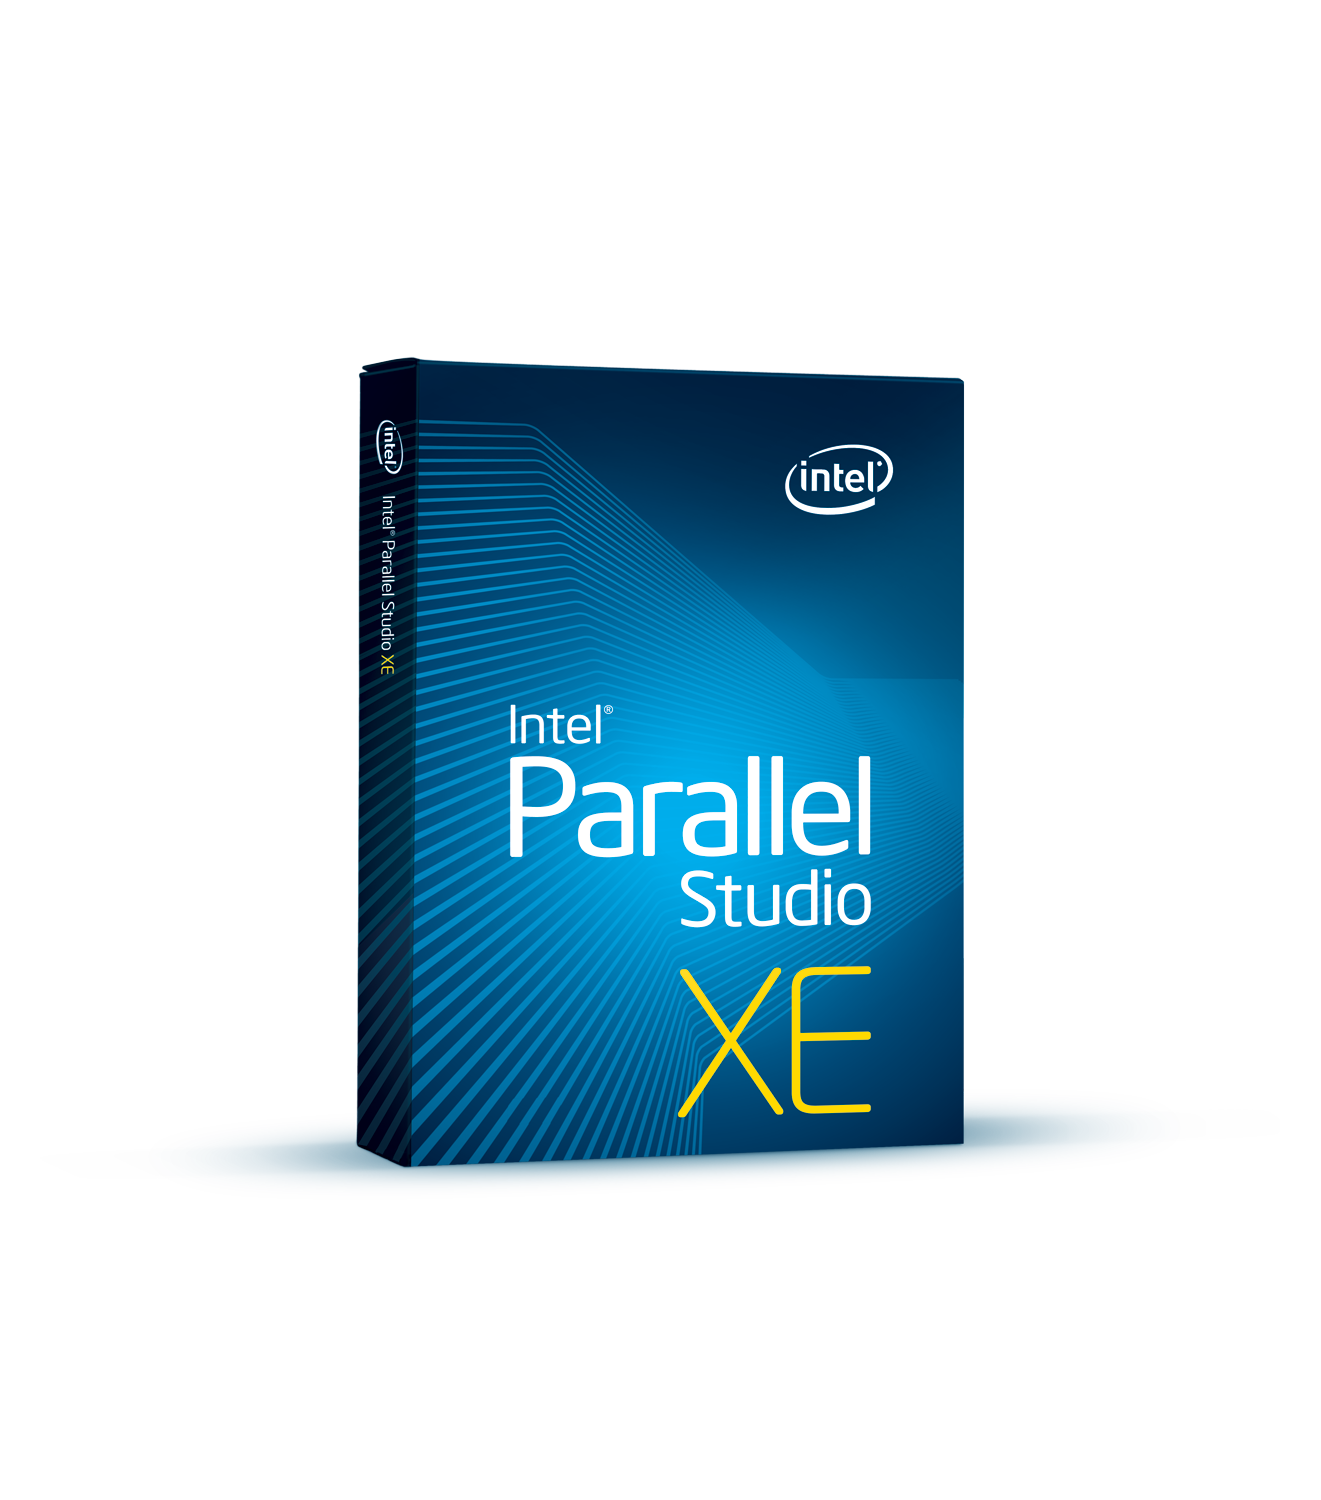 Parallel Studio box shot